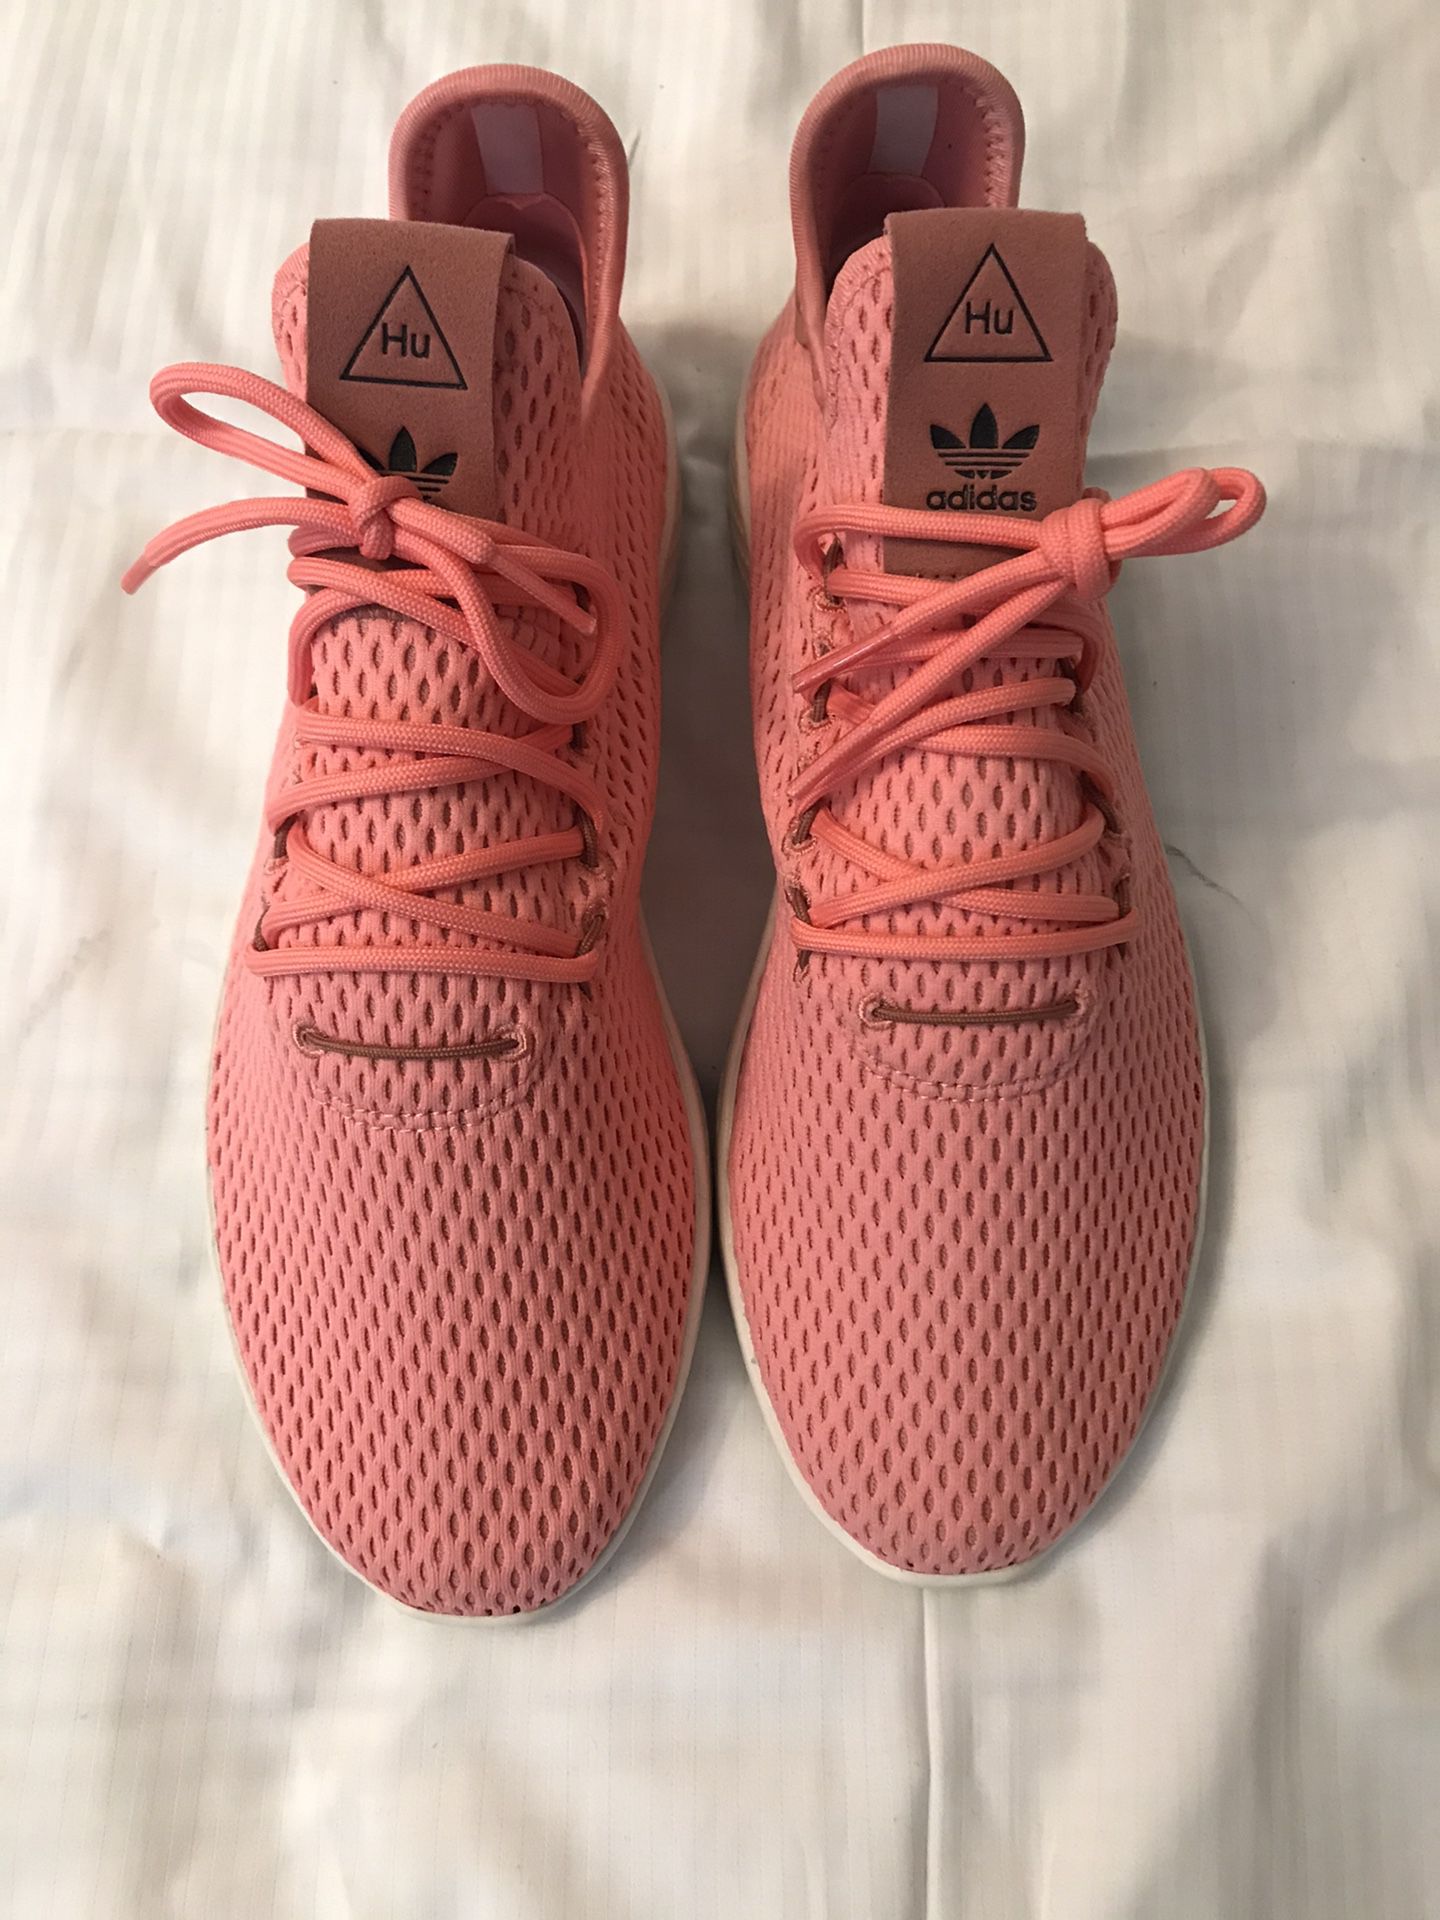 Adidas Pharrell x Tennis Hu Raw pink size 9 - NO box